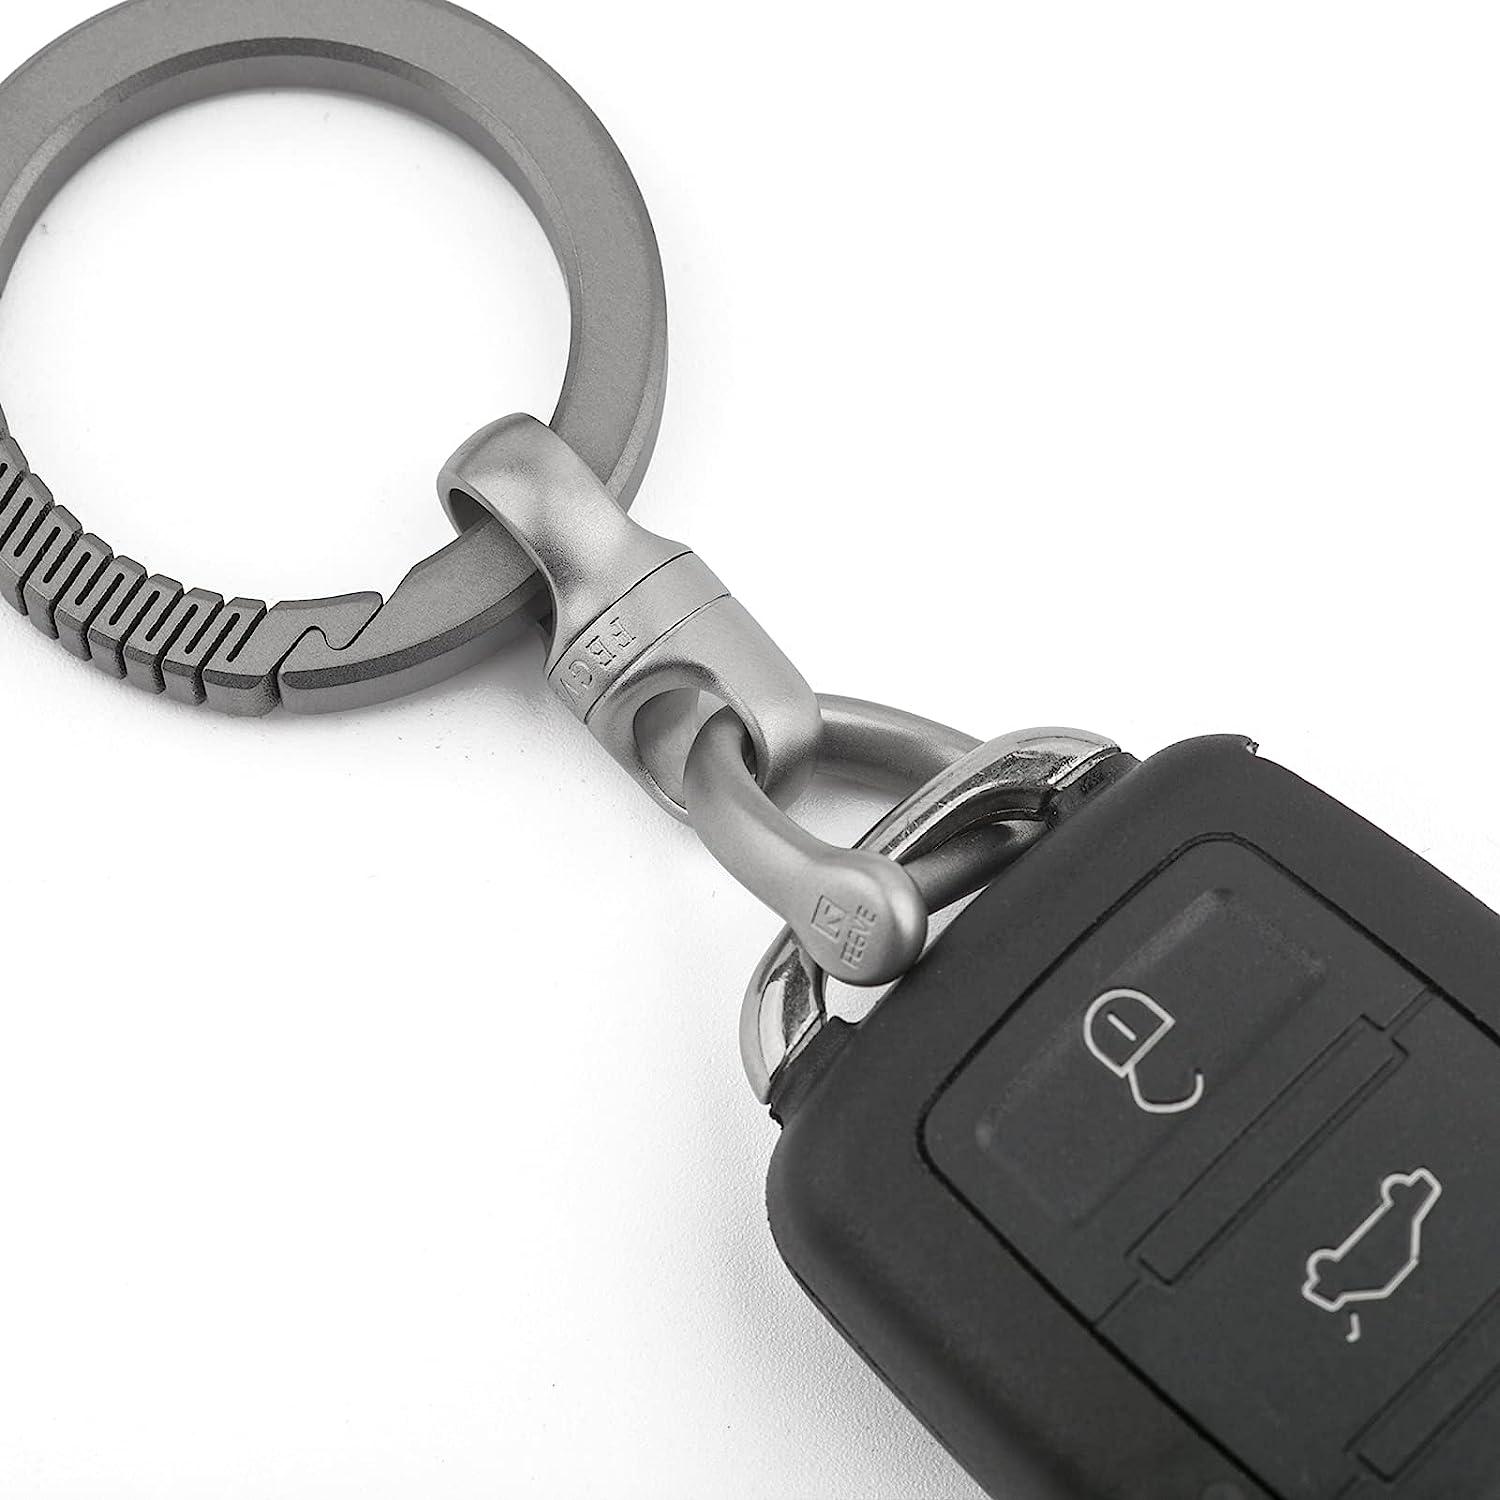 TISUR Key Rings for Keychains,Carabiner Keychain Ring Titanium Key